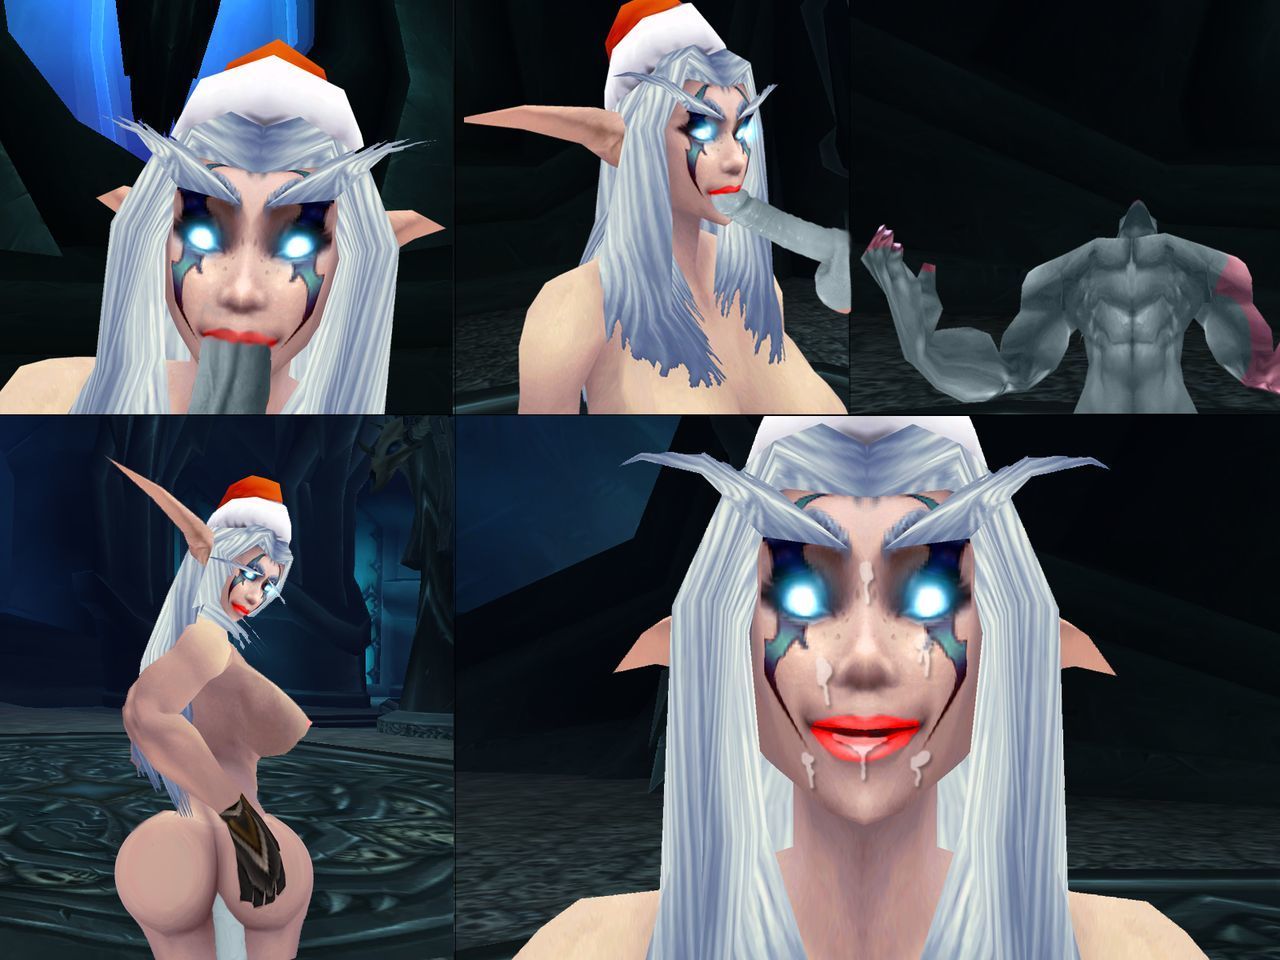 World of Warcraft Screenshot Manipulations - part 3